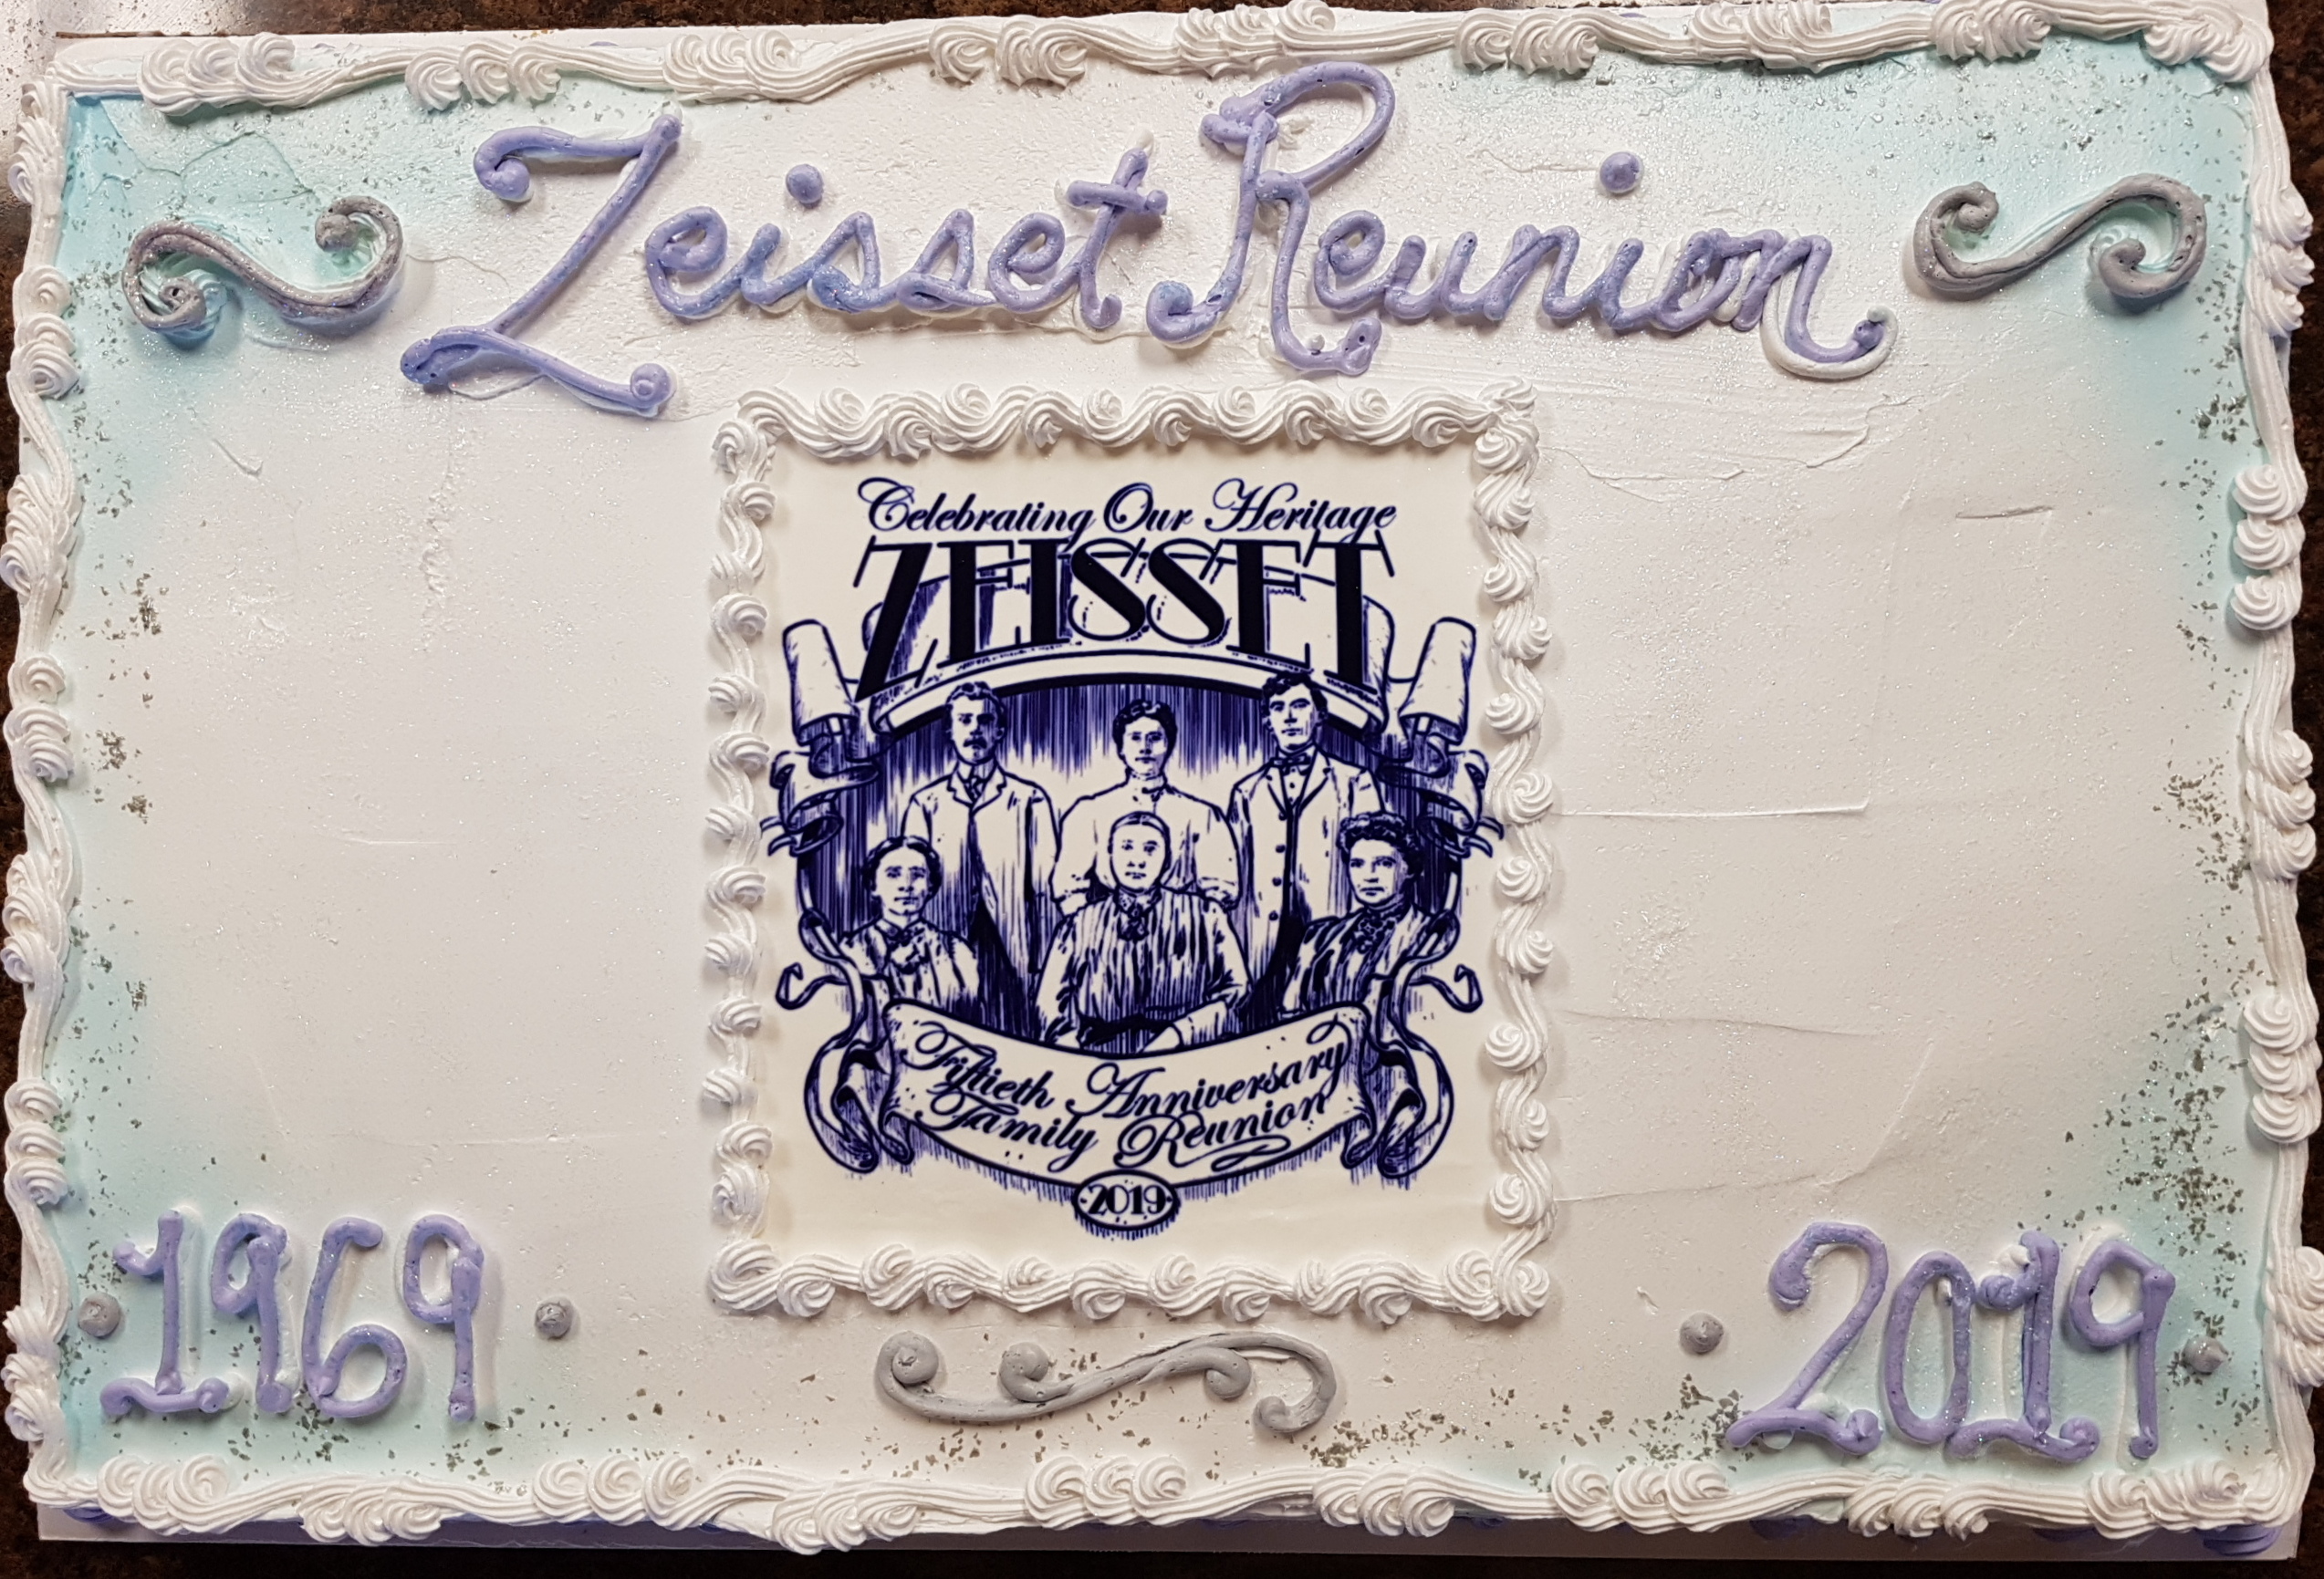 50th Anniversary Reunion Cake